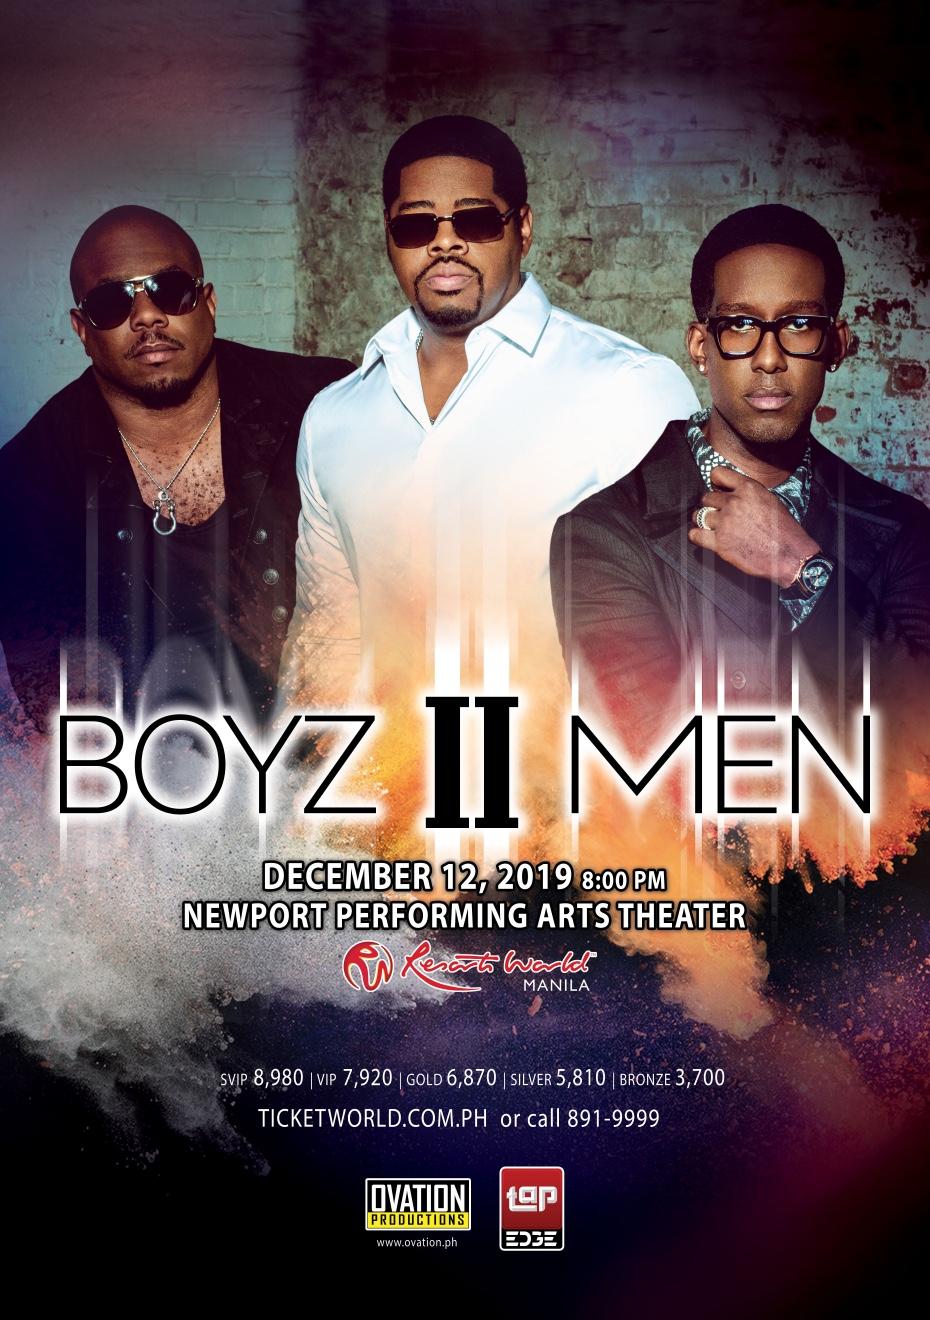 Boyz II Men to return to Manila in December for concert ABSCBN News